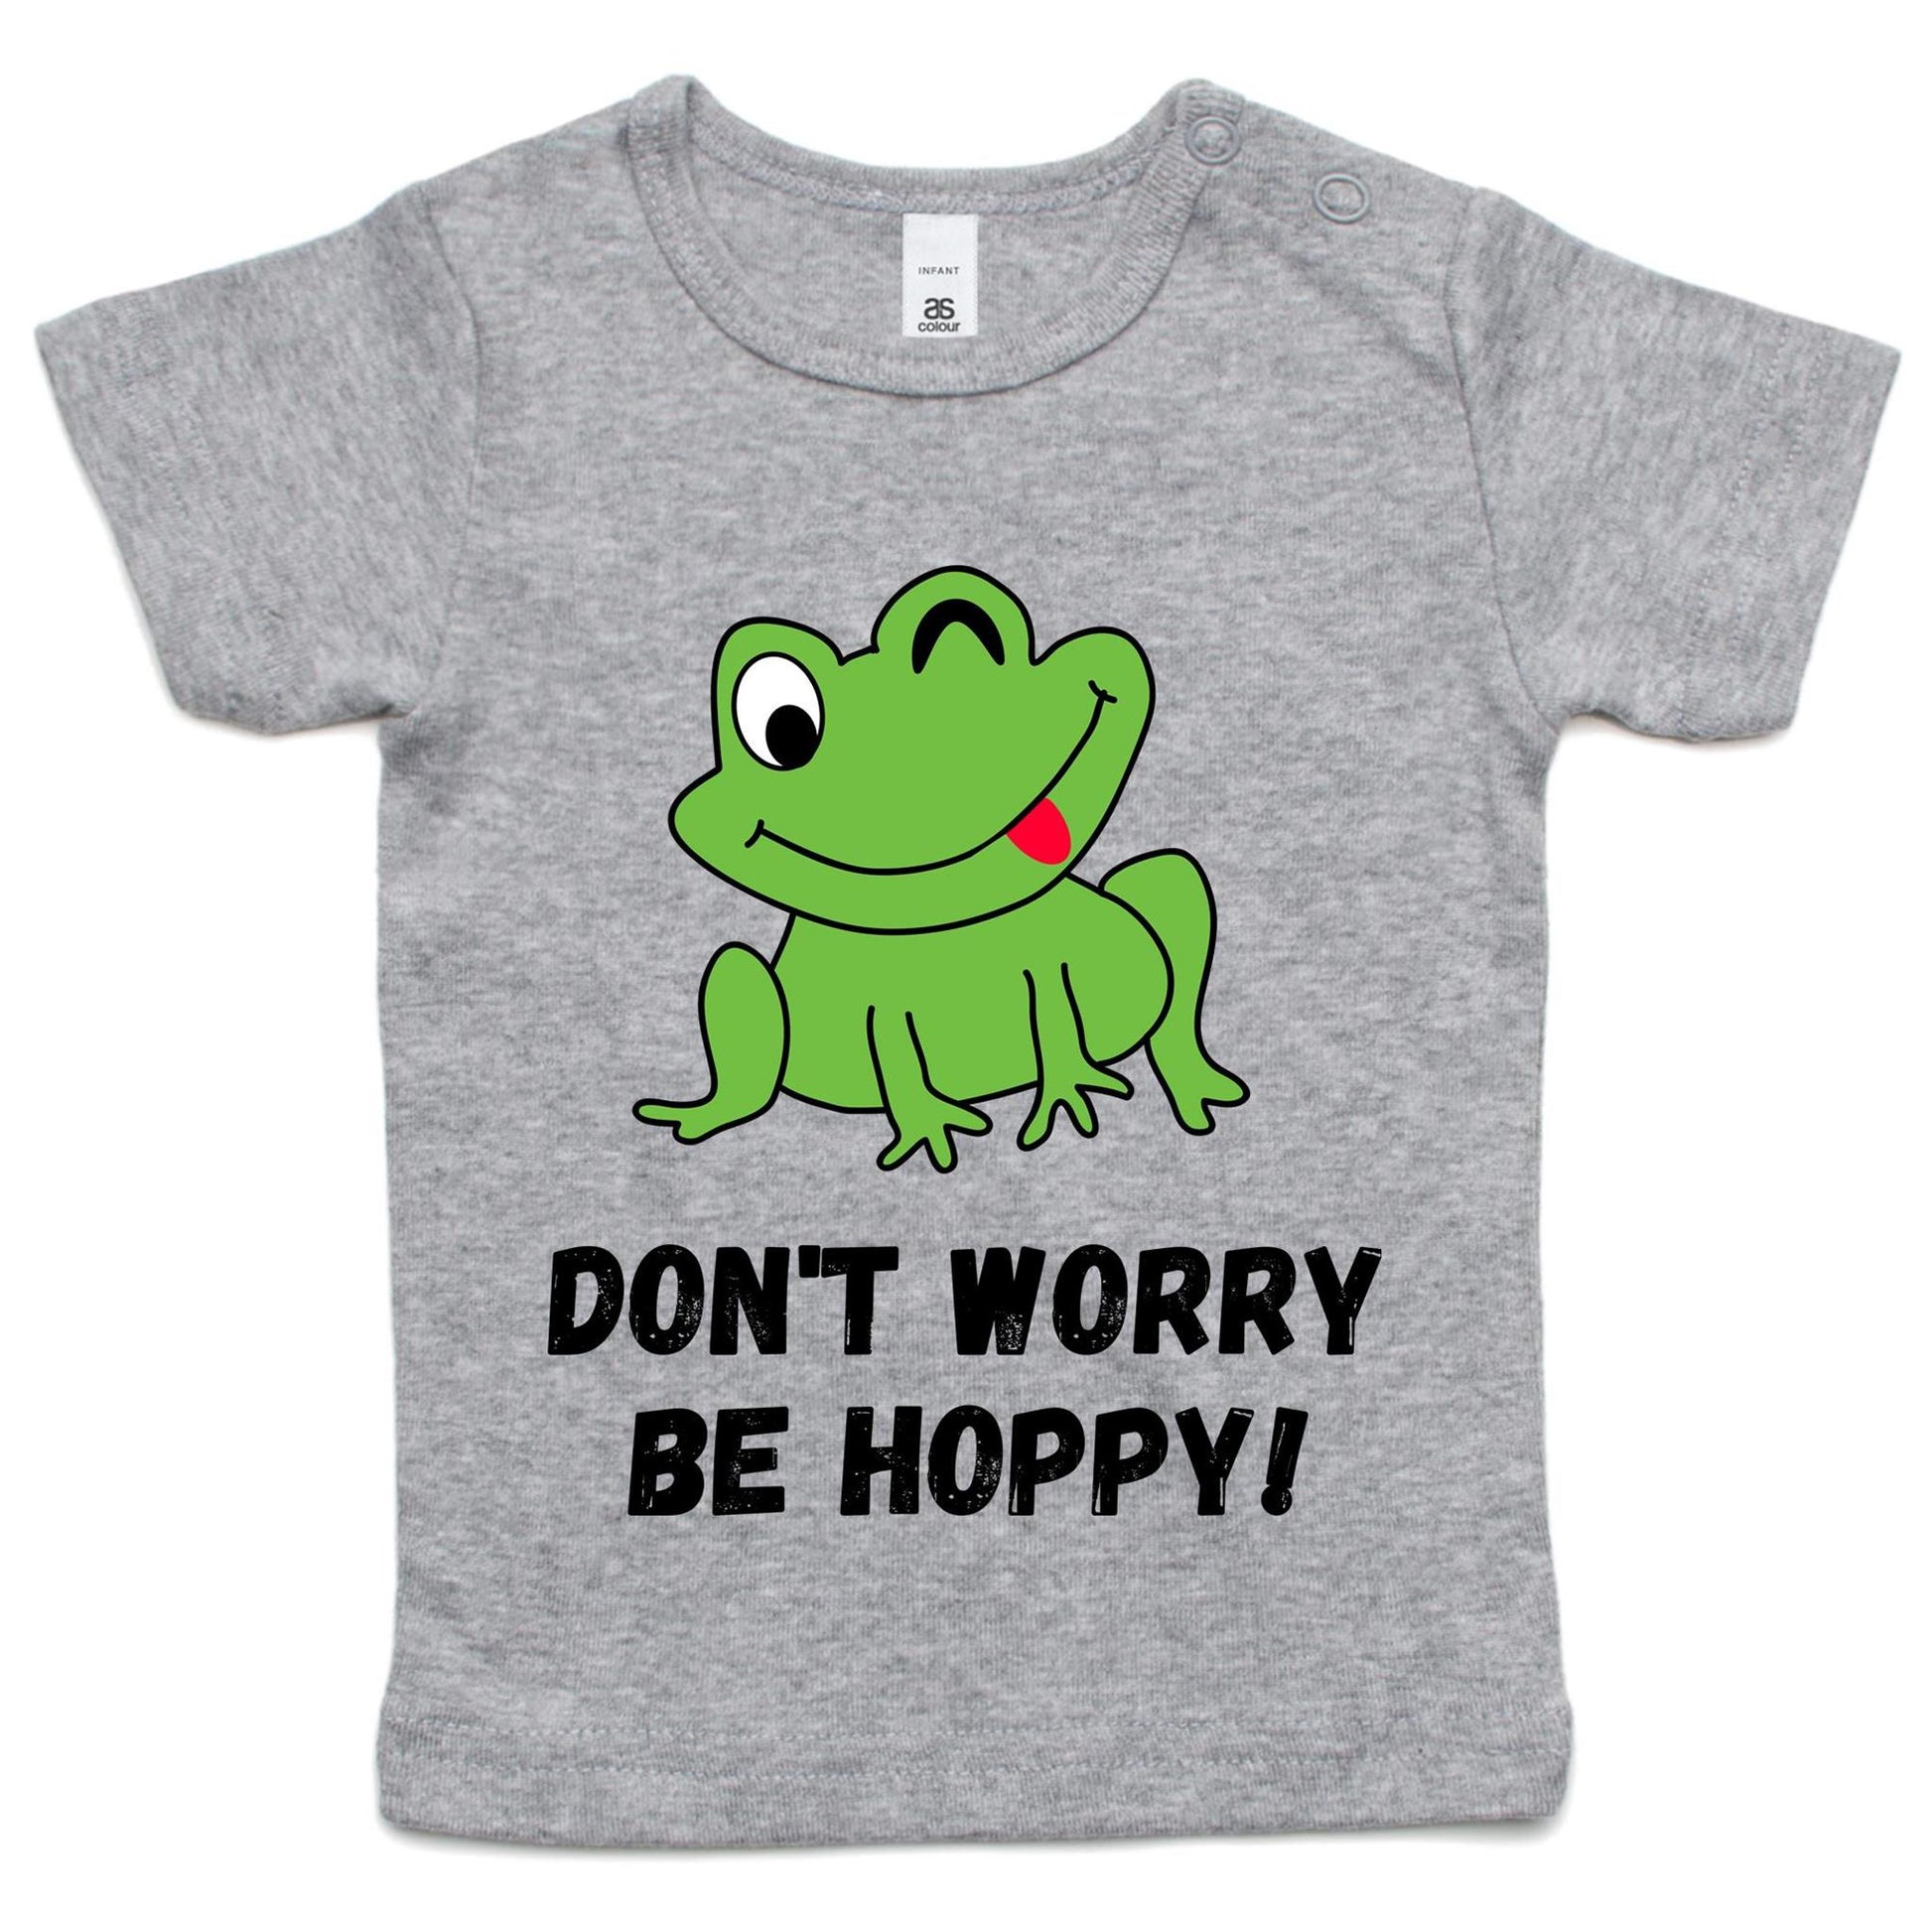 Don't Worry Be Hoppy - Baby T-shirt Grey Marle Baby T-shirt animal